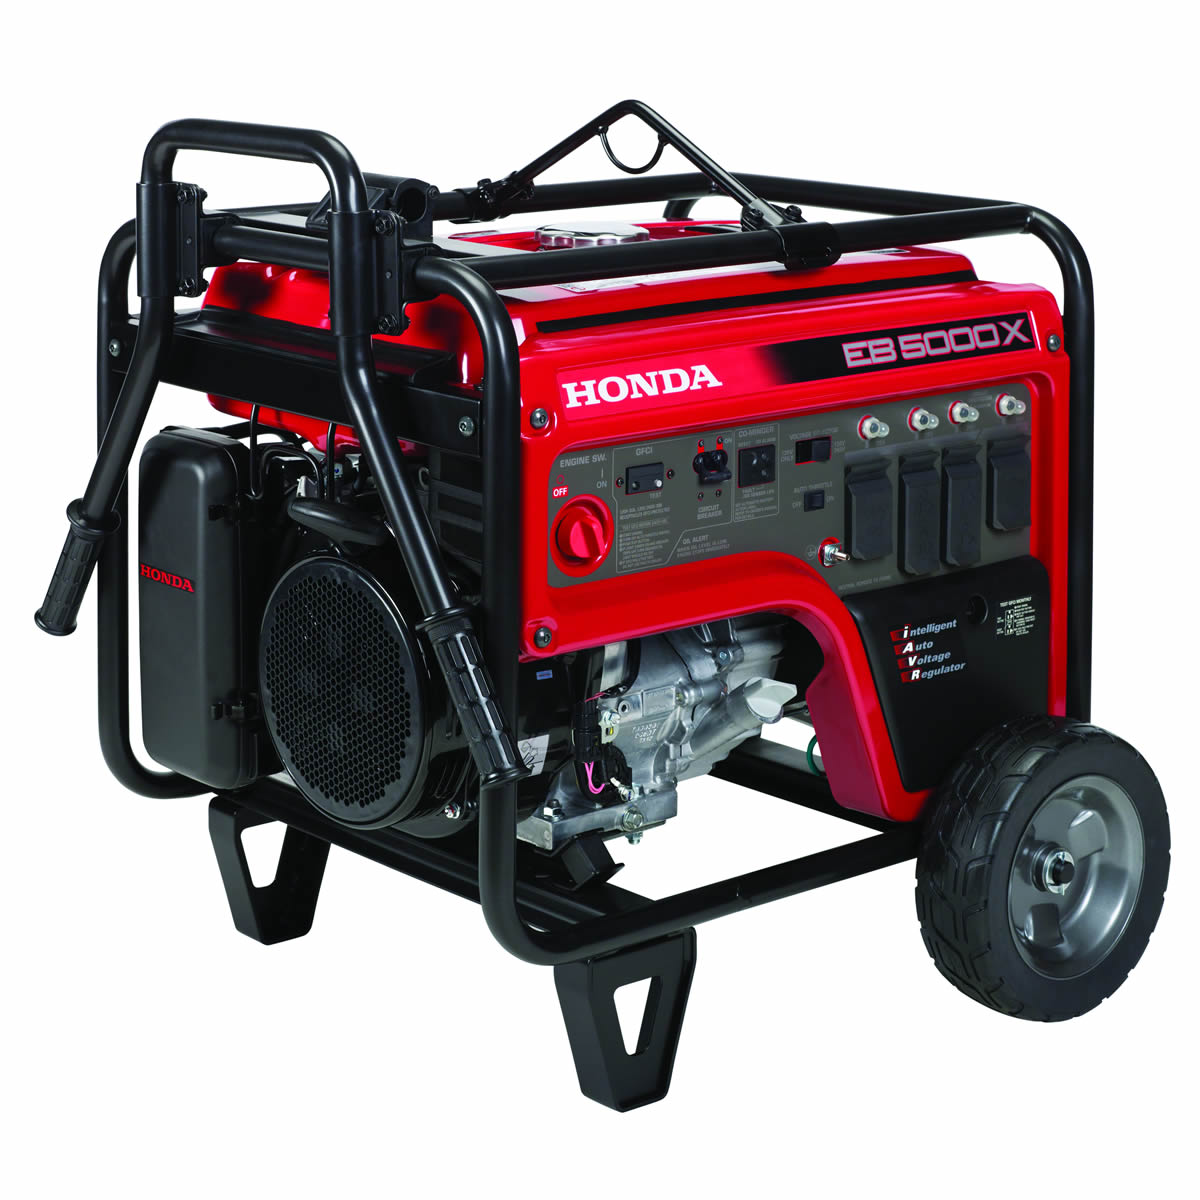 How To Use A Honda Power Generator